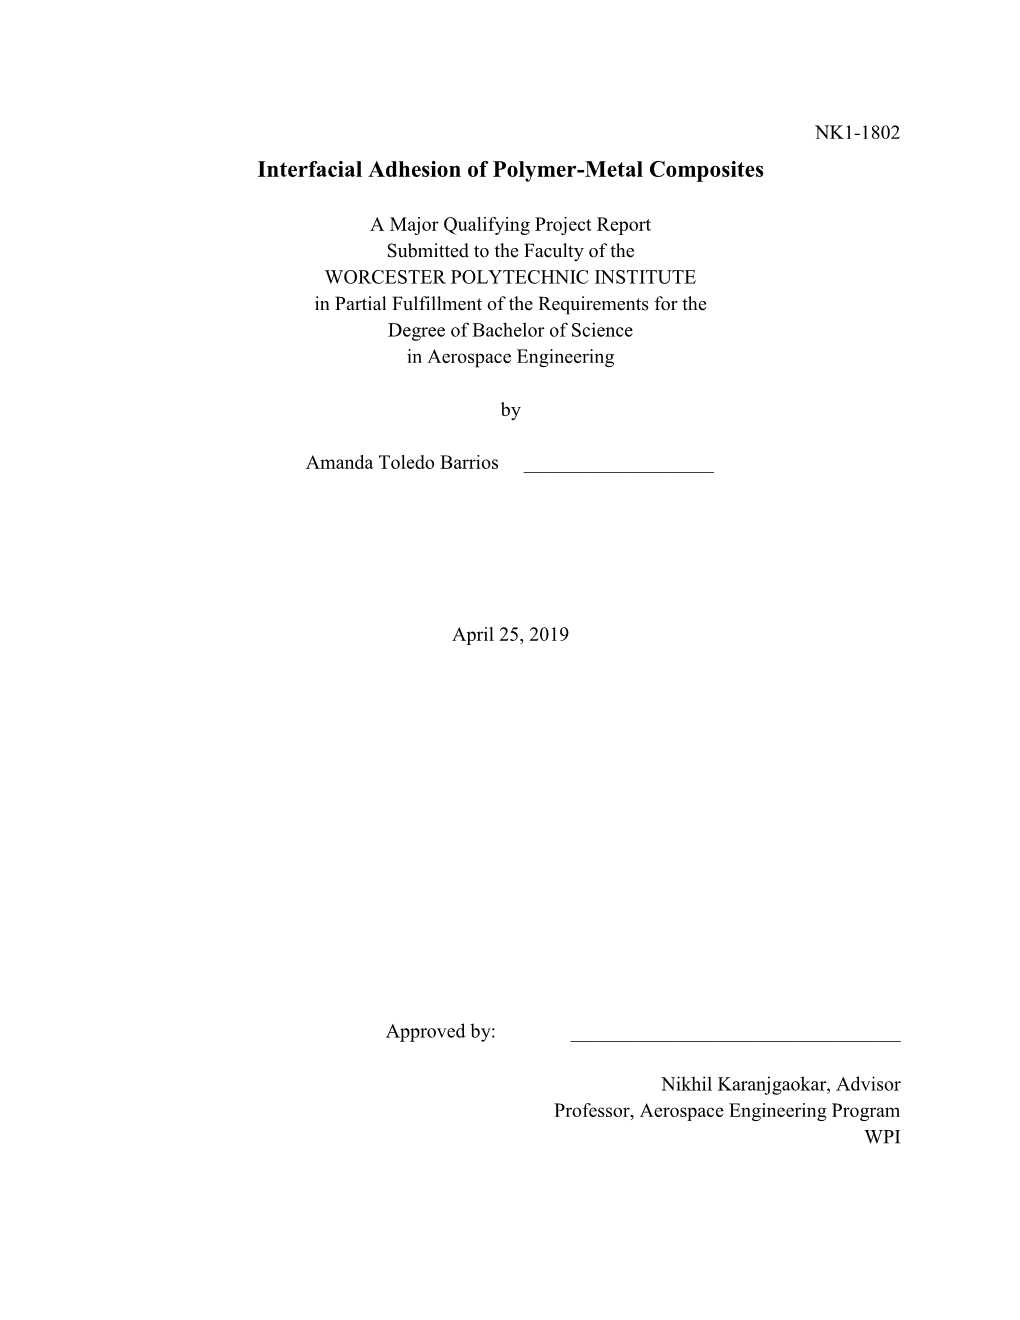 Interfacial Adhesion of Polymer-Metal Composites